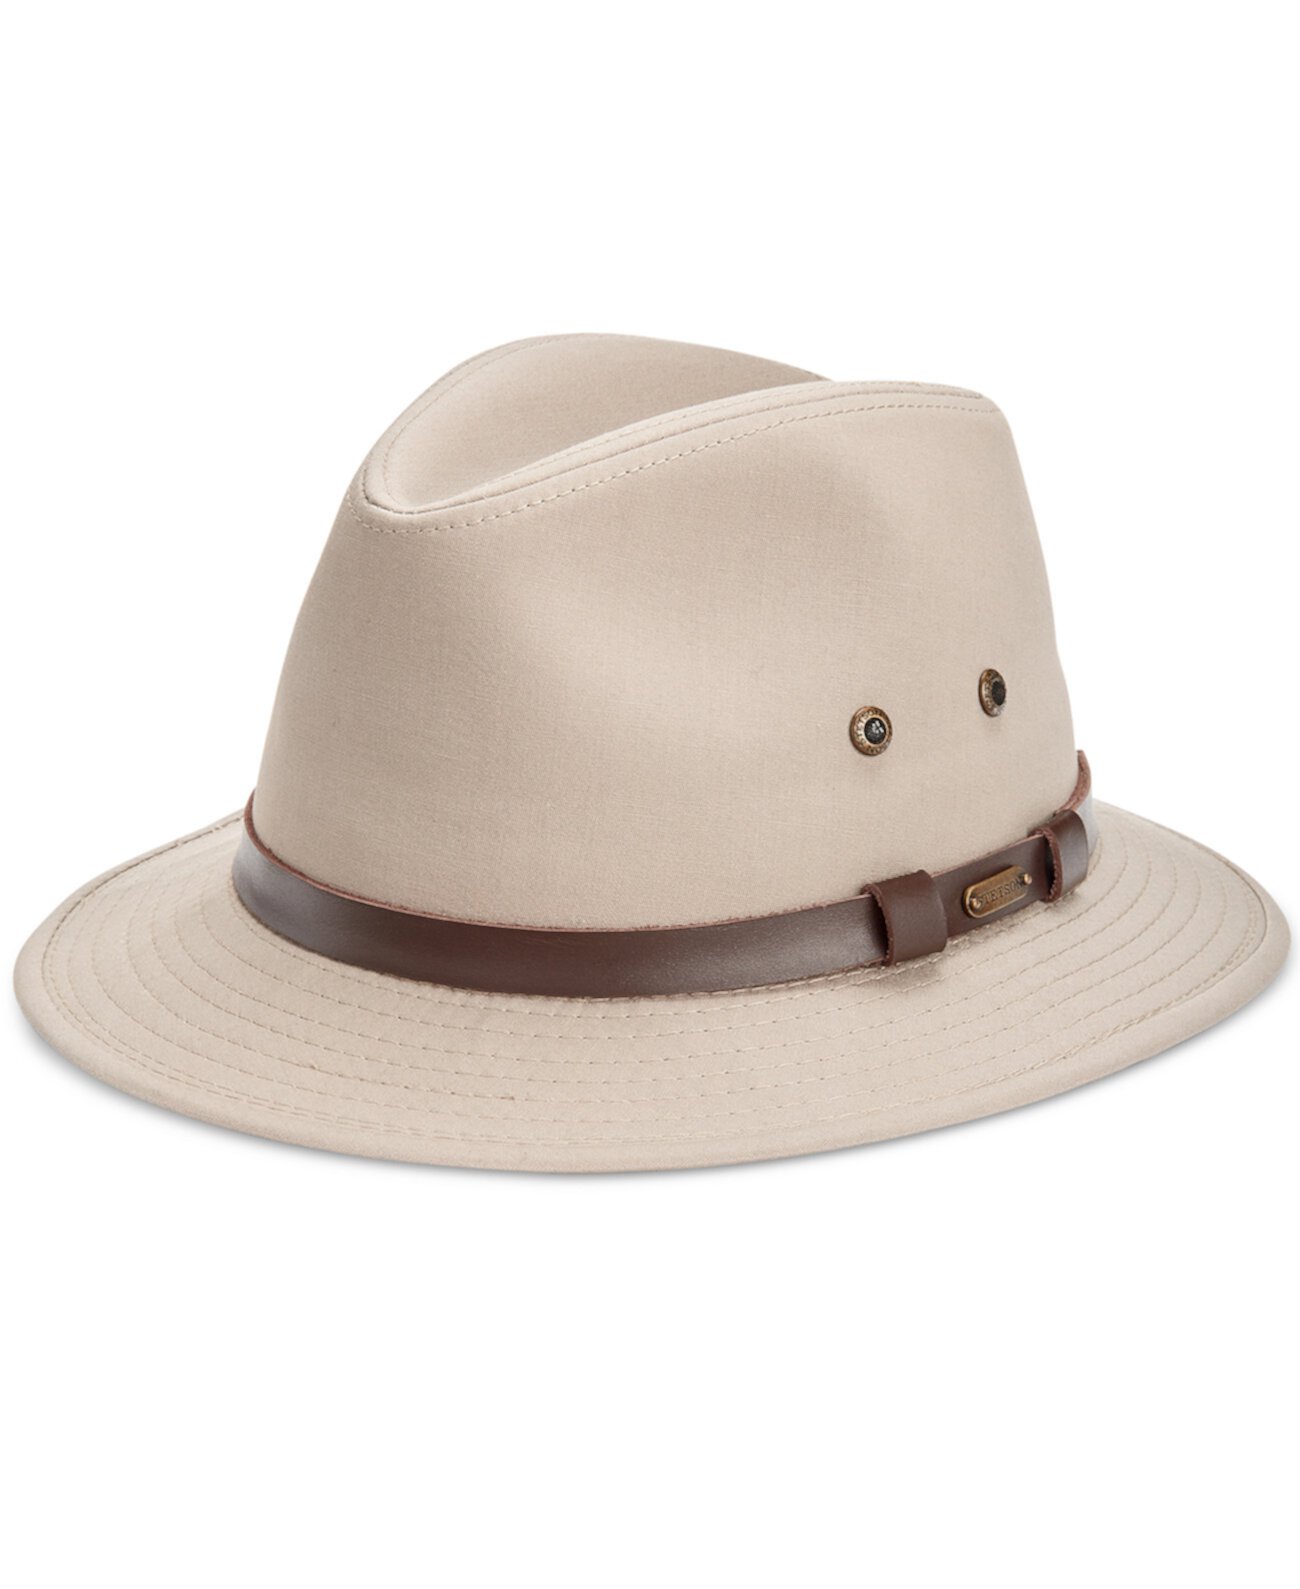 Мужская шляпа Gable Rain Safari Stetson